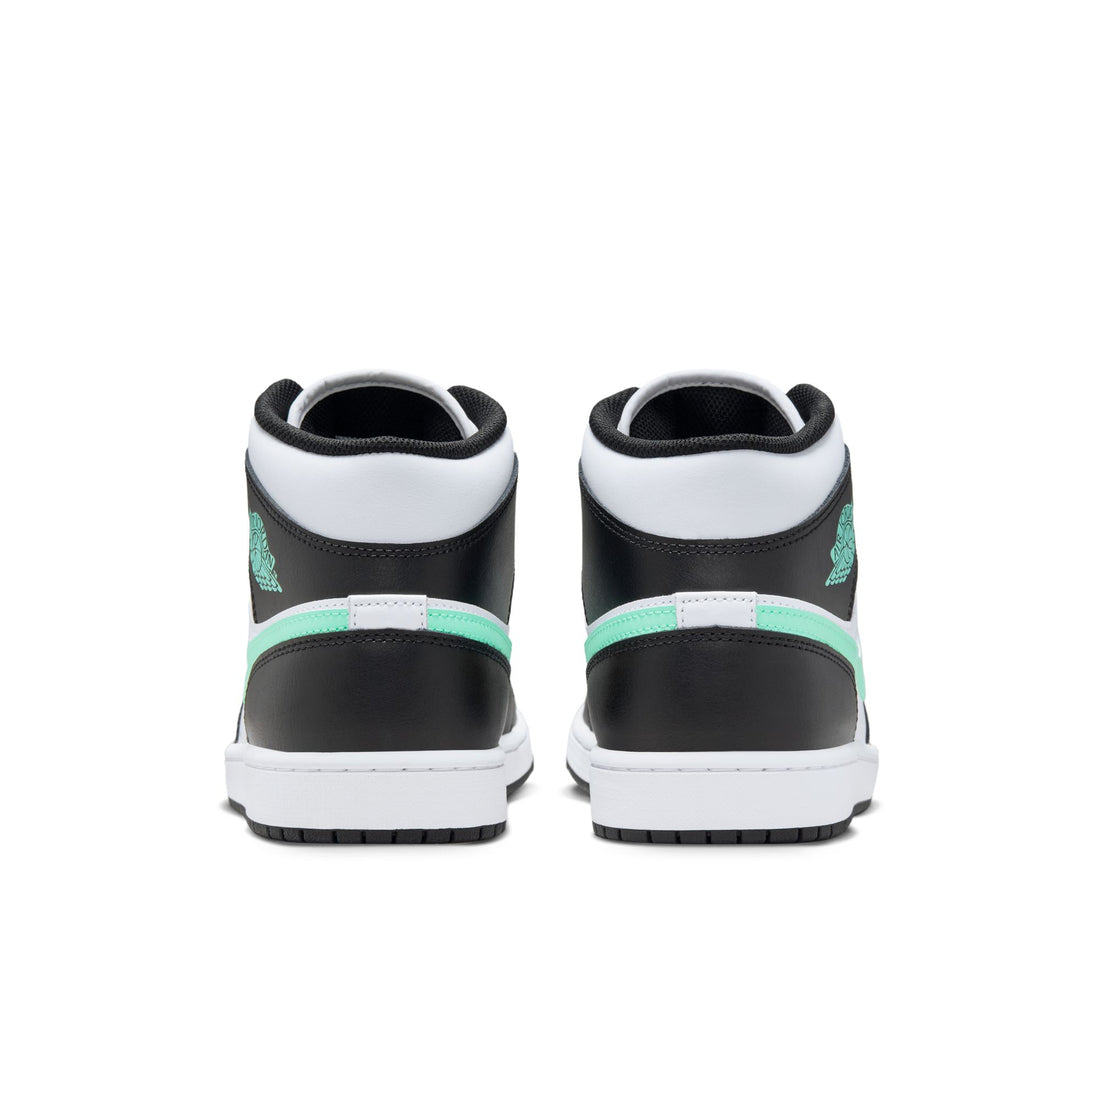 Air Jordan 1 Mid (White/Green Glow/Black)